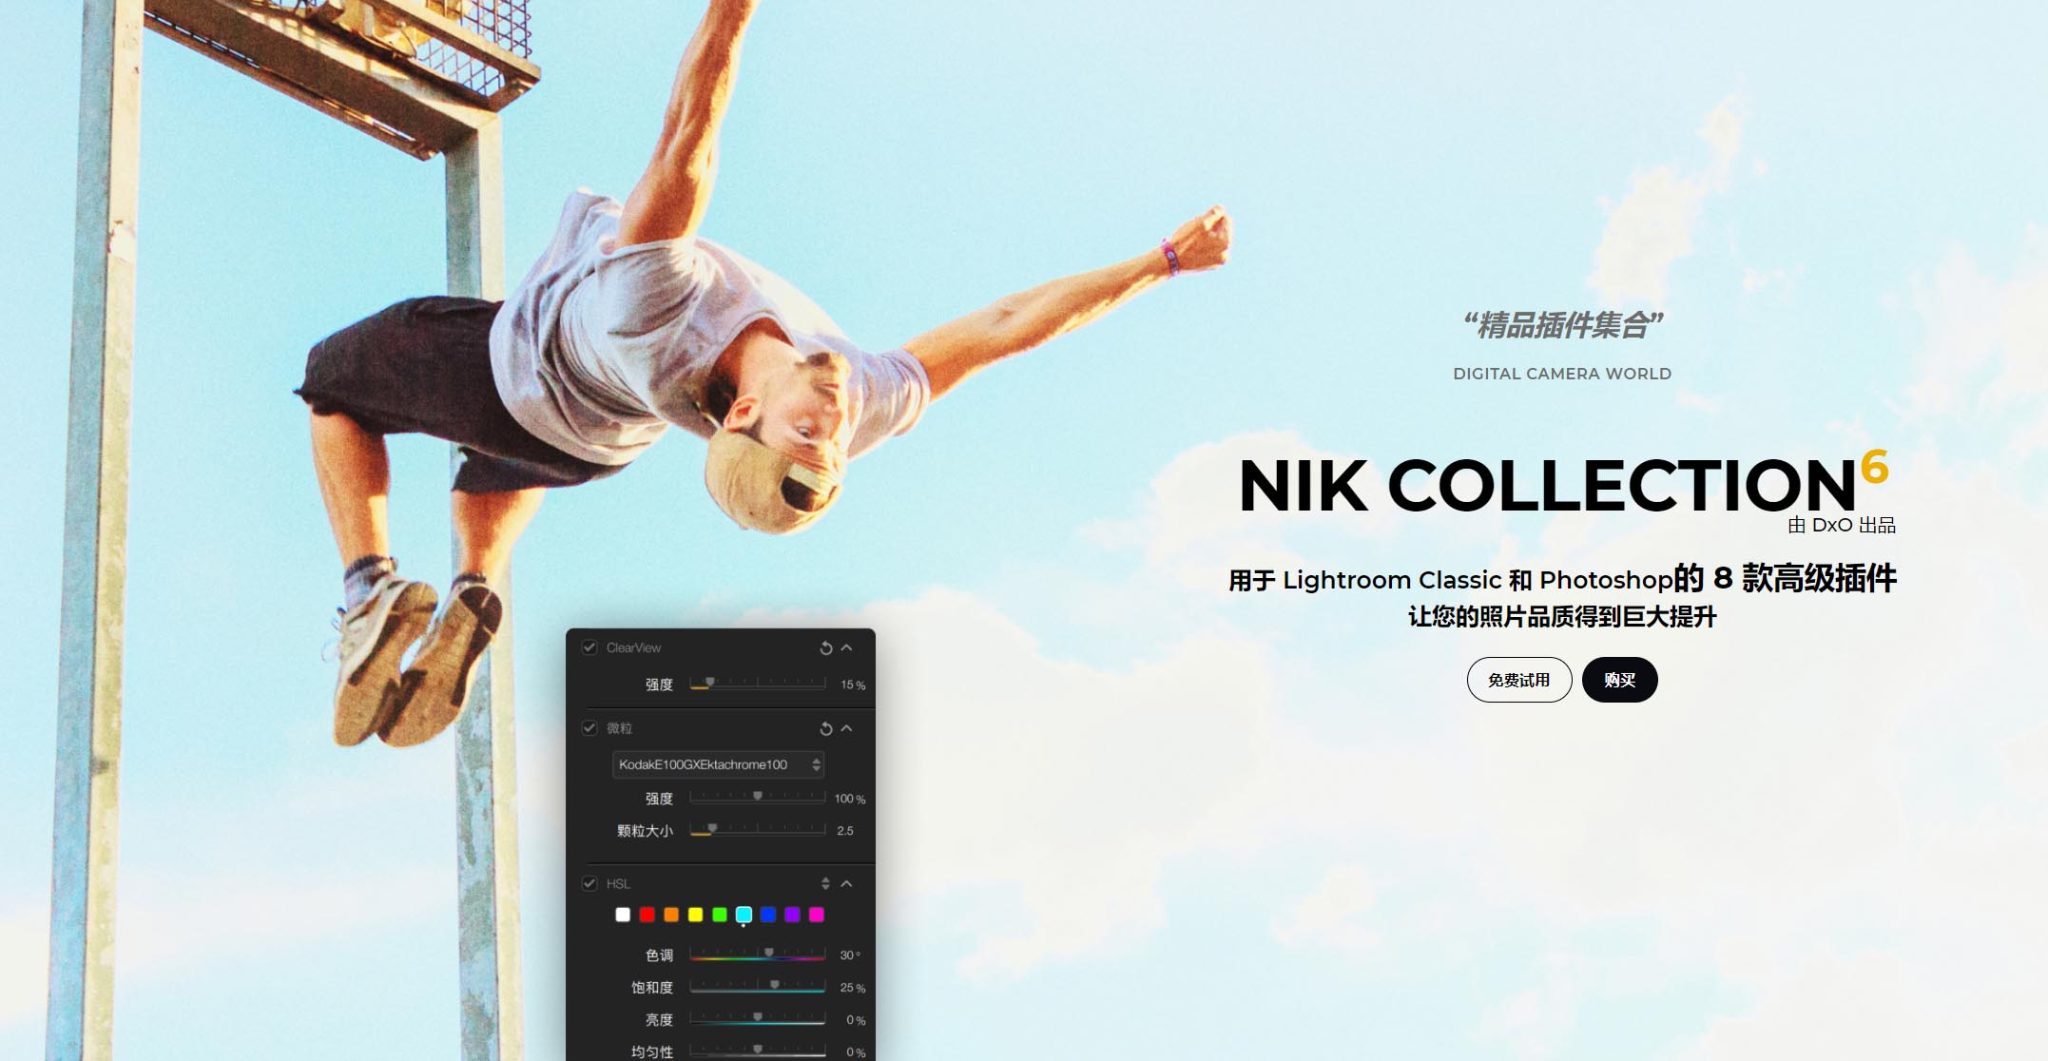 PS插件-Nik Collection 6.8.0胶片调色降噪锐化HDR处理特效 (照片编辑插件套件) 中文汉化版Color Efex Pro 6 插件预设 第1张